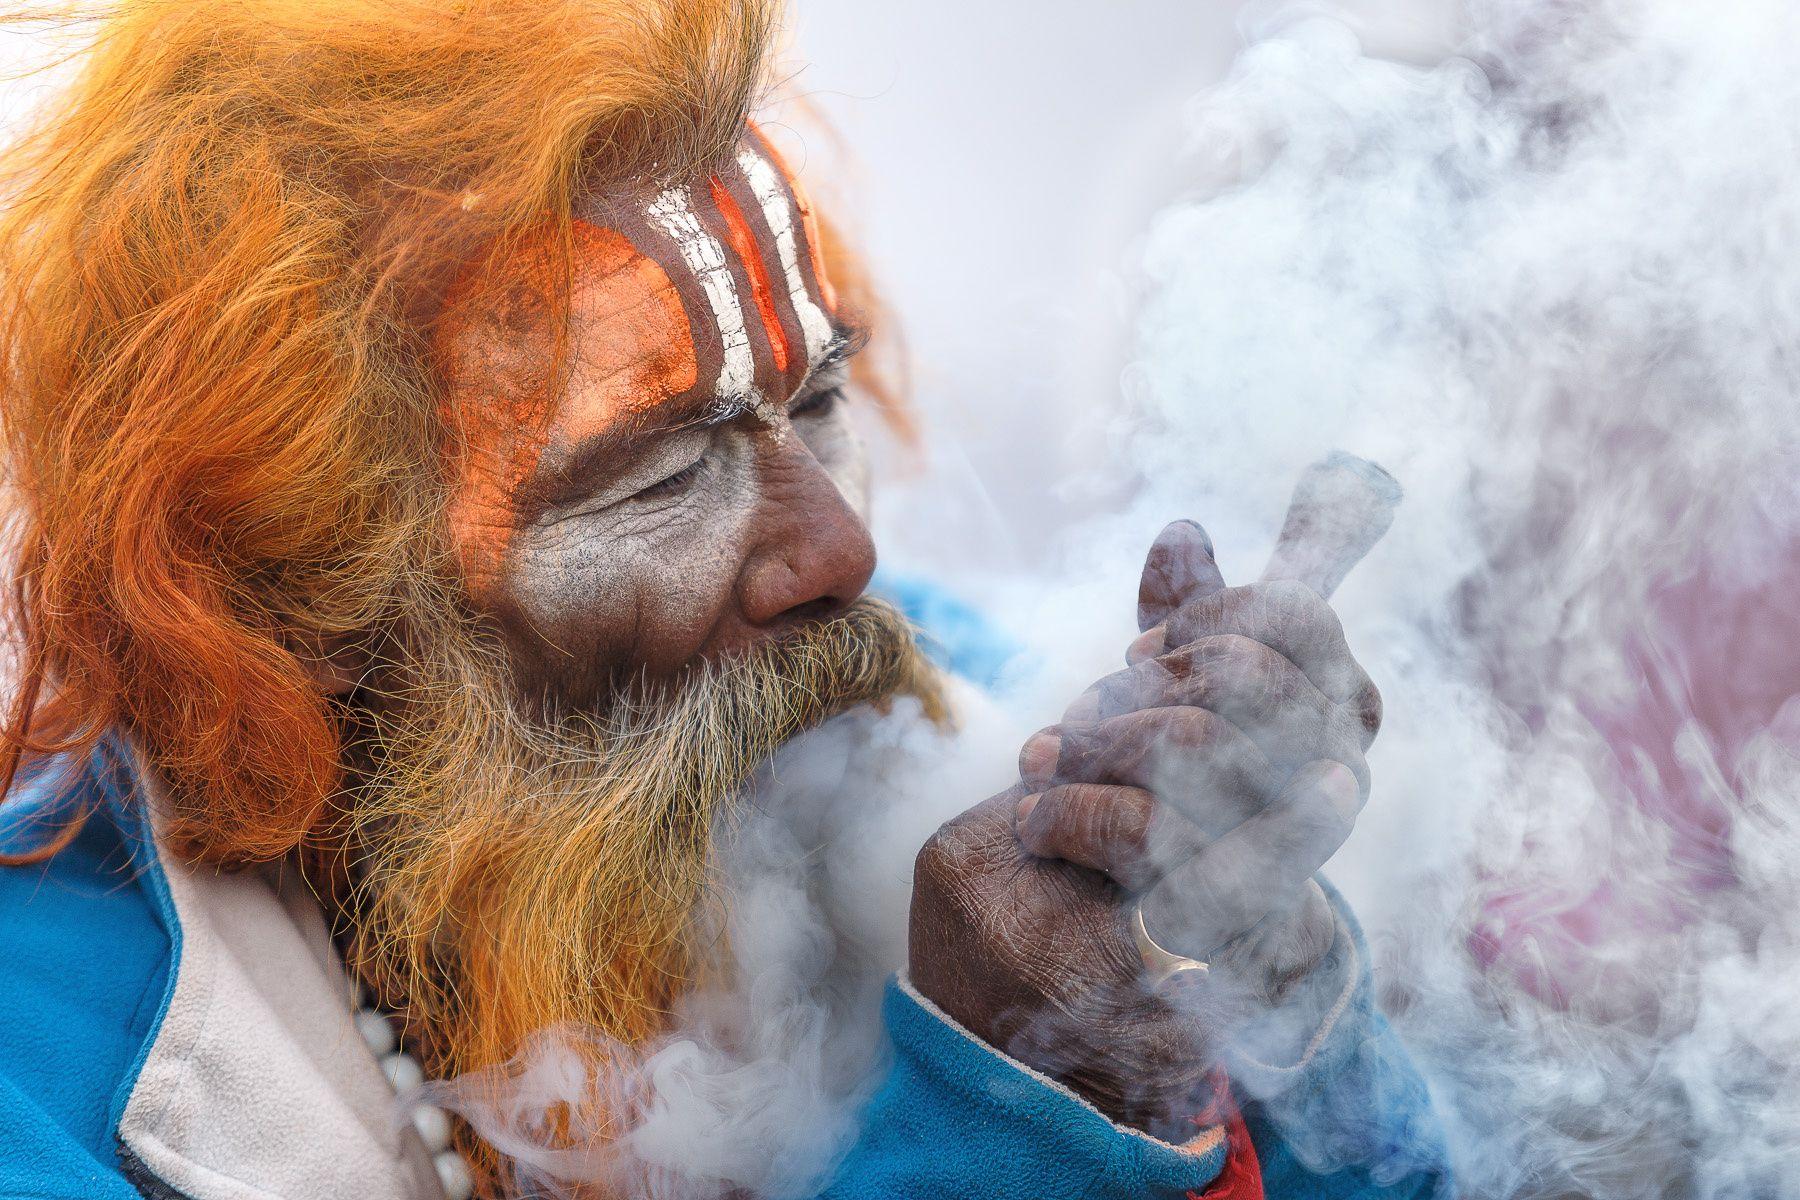 Naga sadhu Stock Photos, Royalty Free Naga sadhu Images | Depositphotos